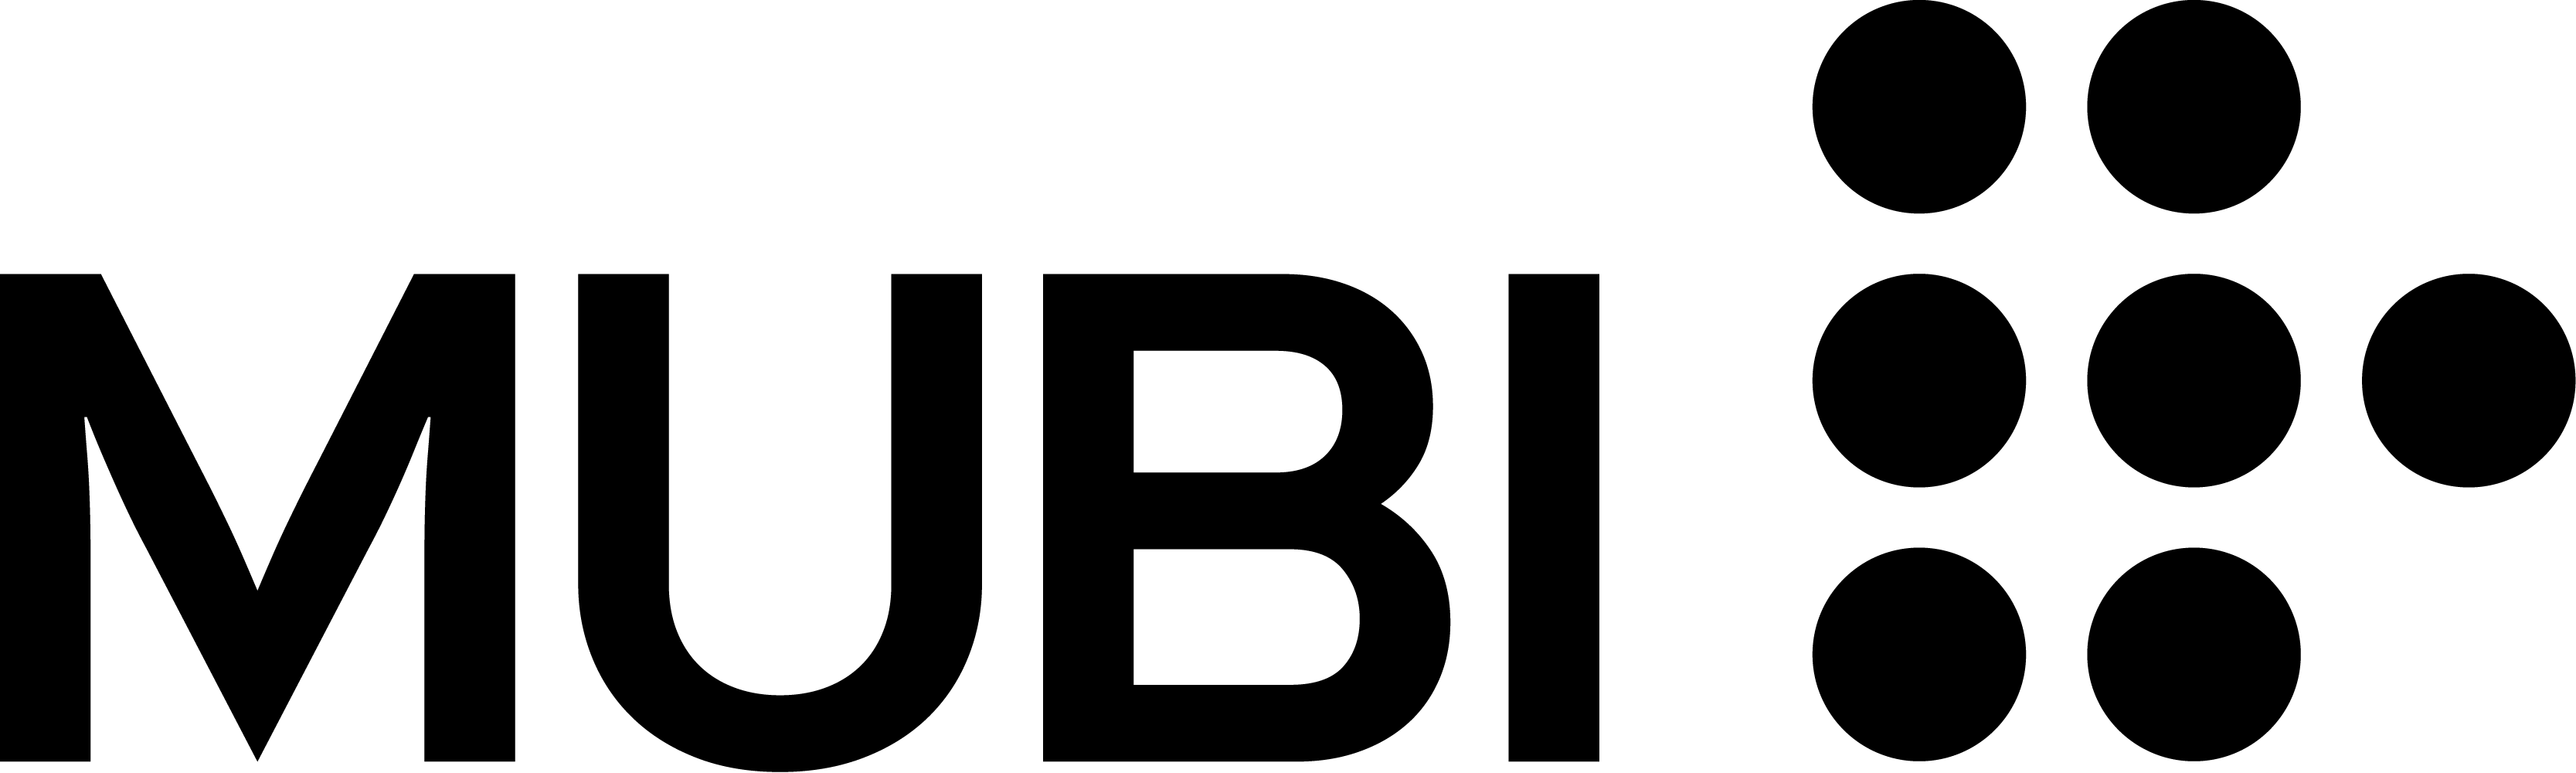 MUBI-logo.png